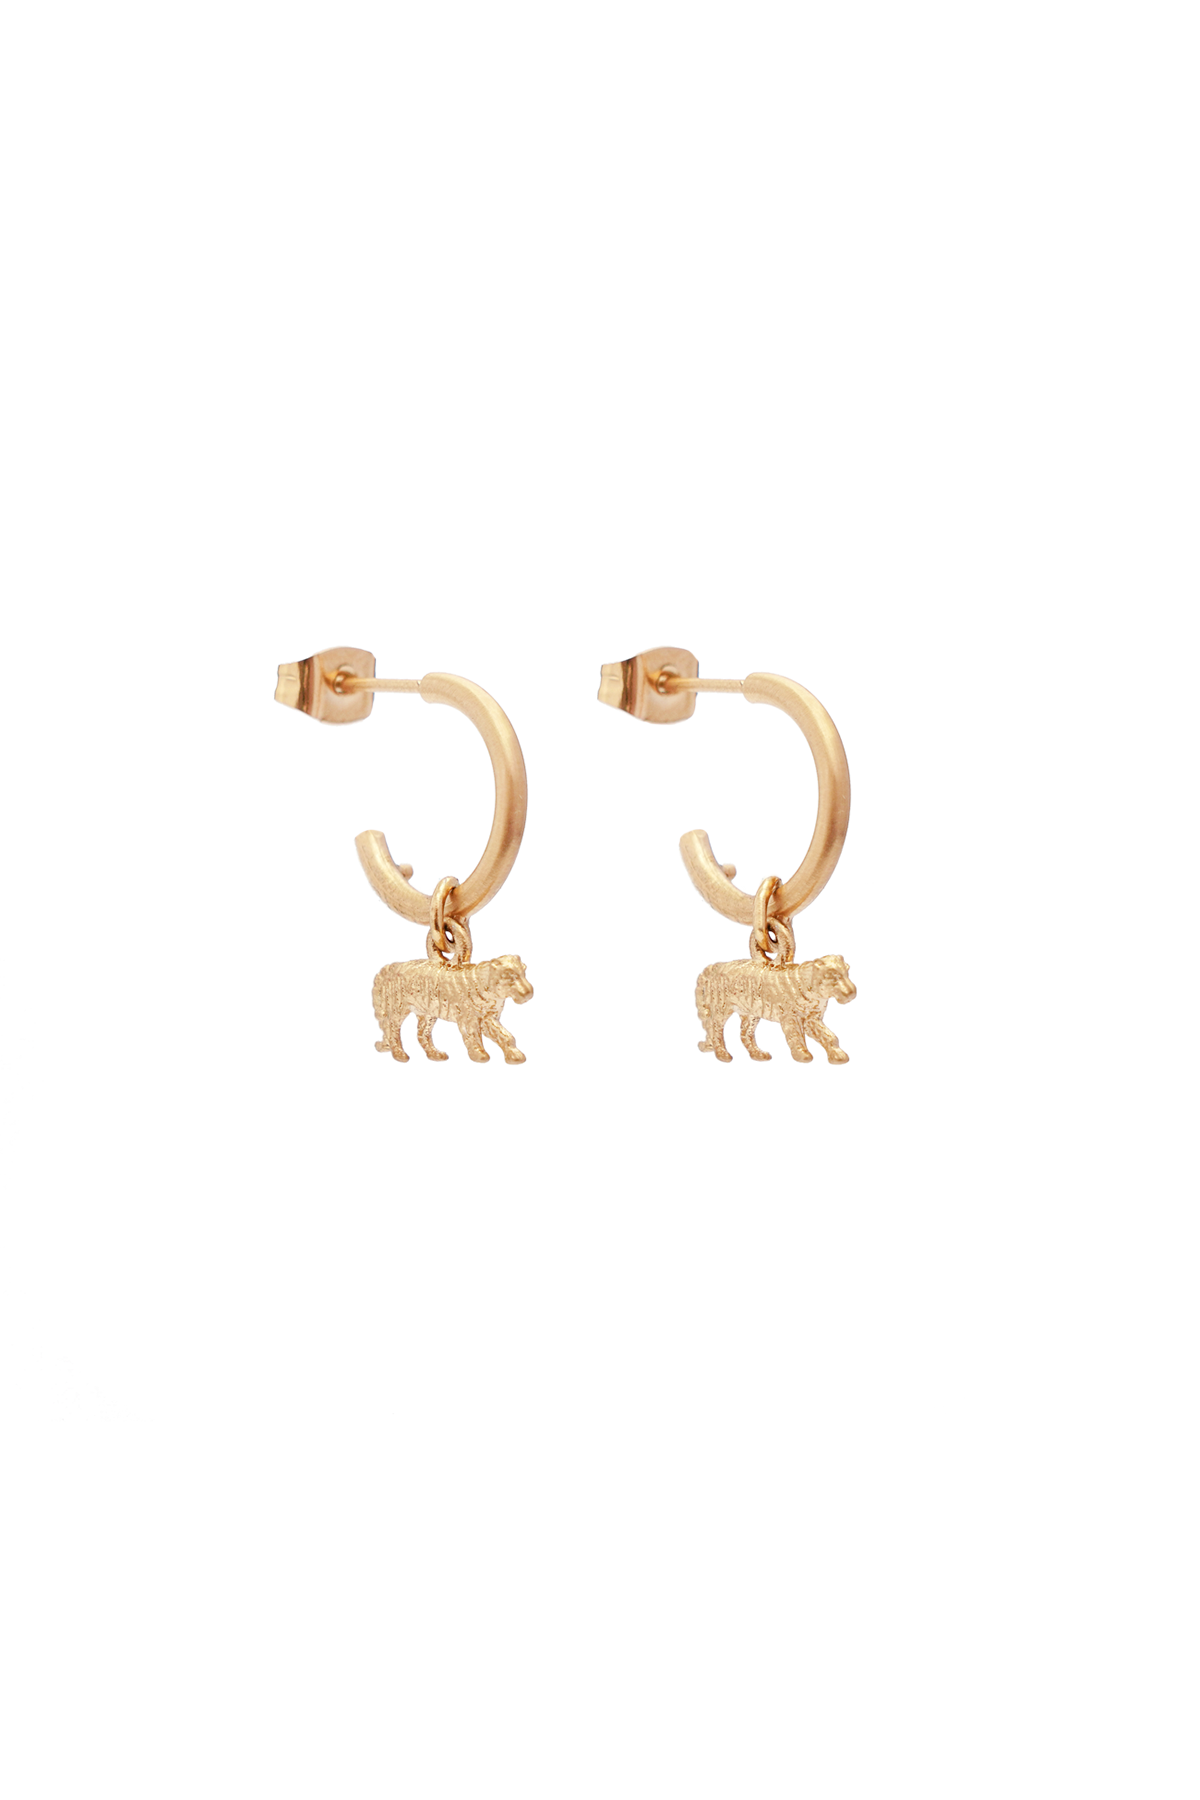 Tiger earrings